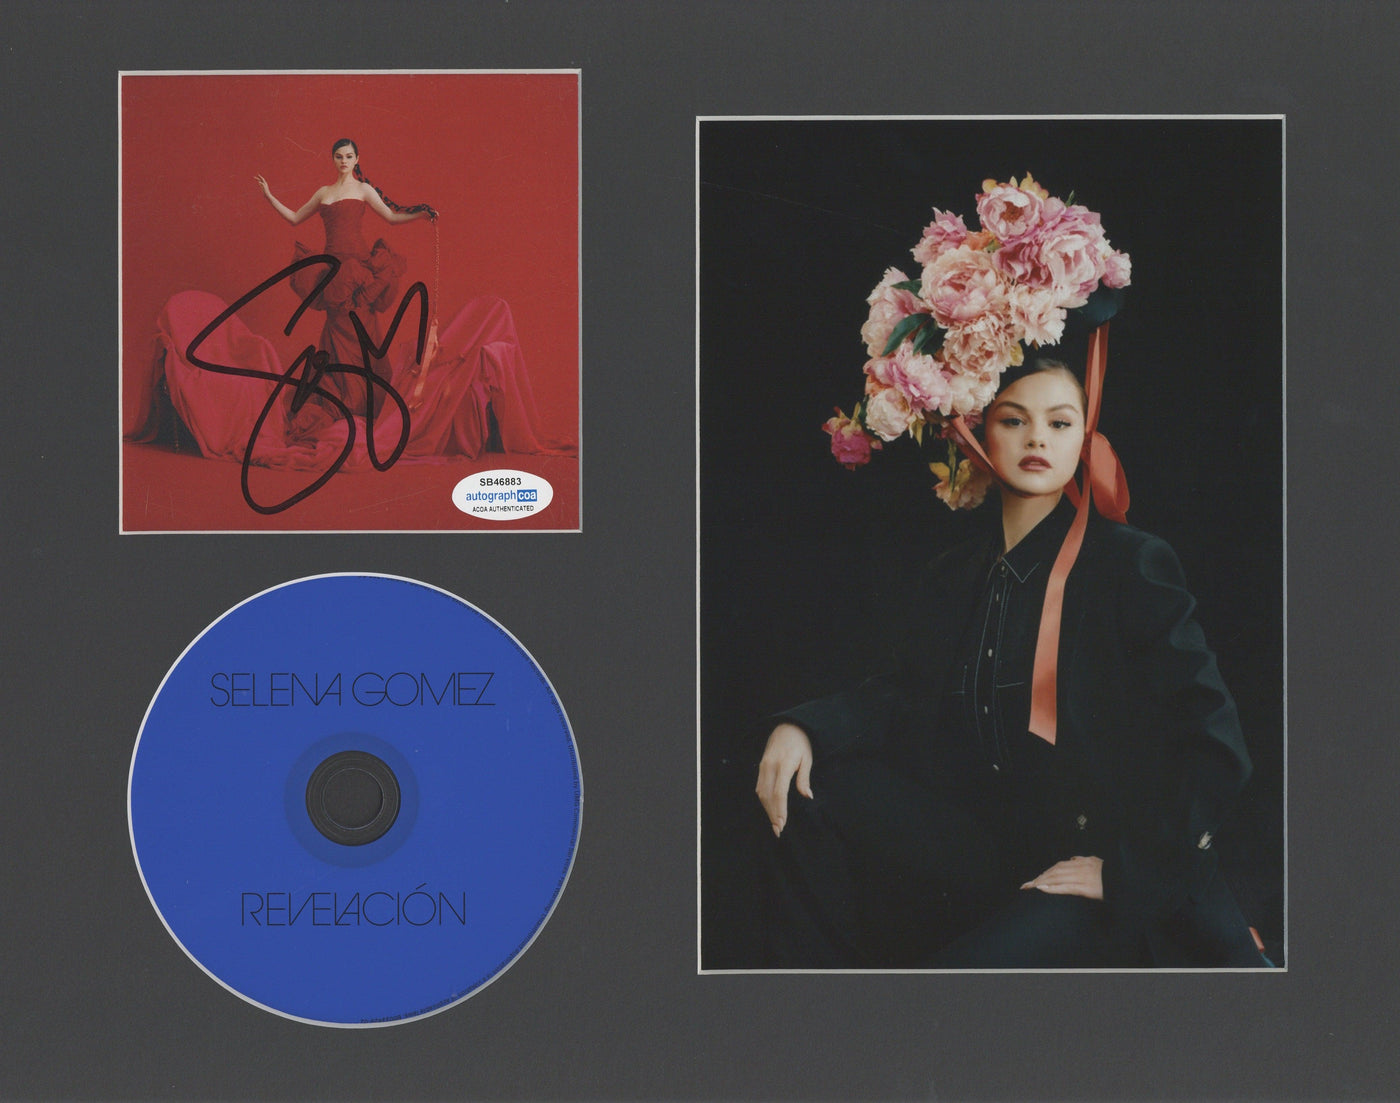 Selena Gomez Signed Revelacion CD Cover Framed Autographed ACOA